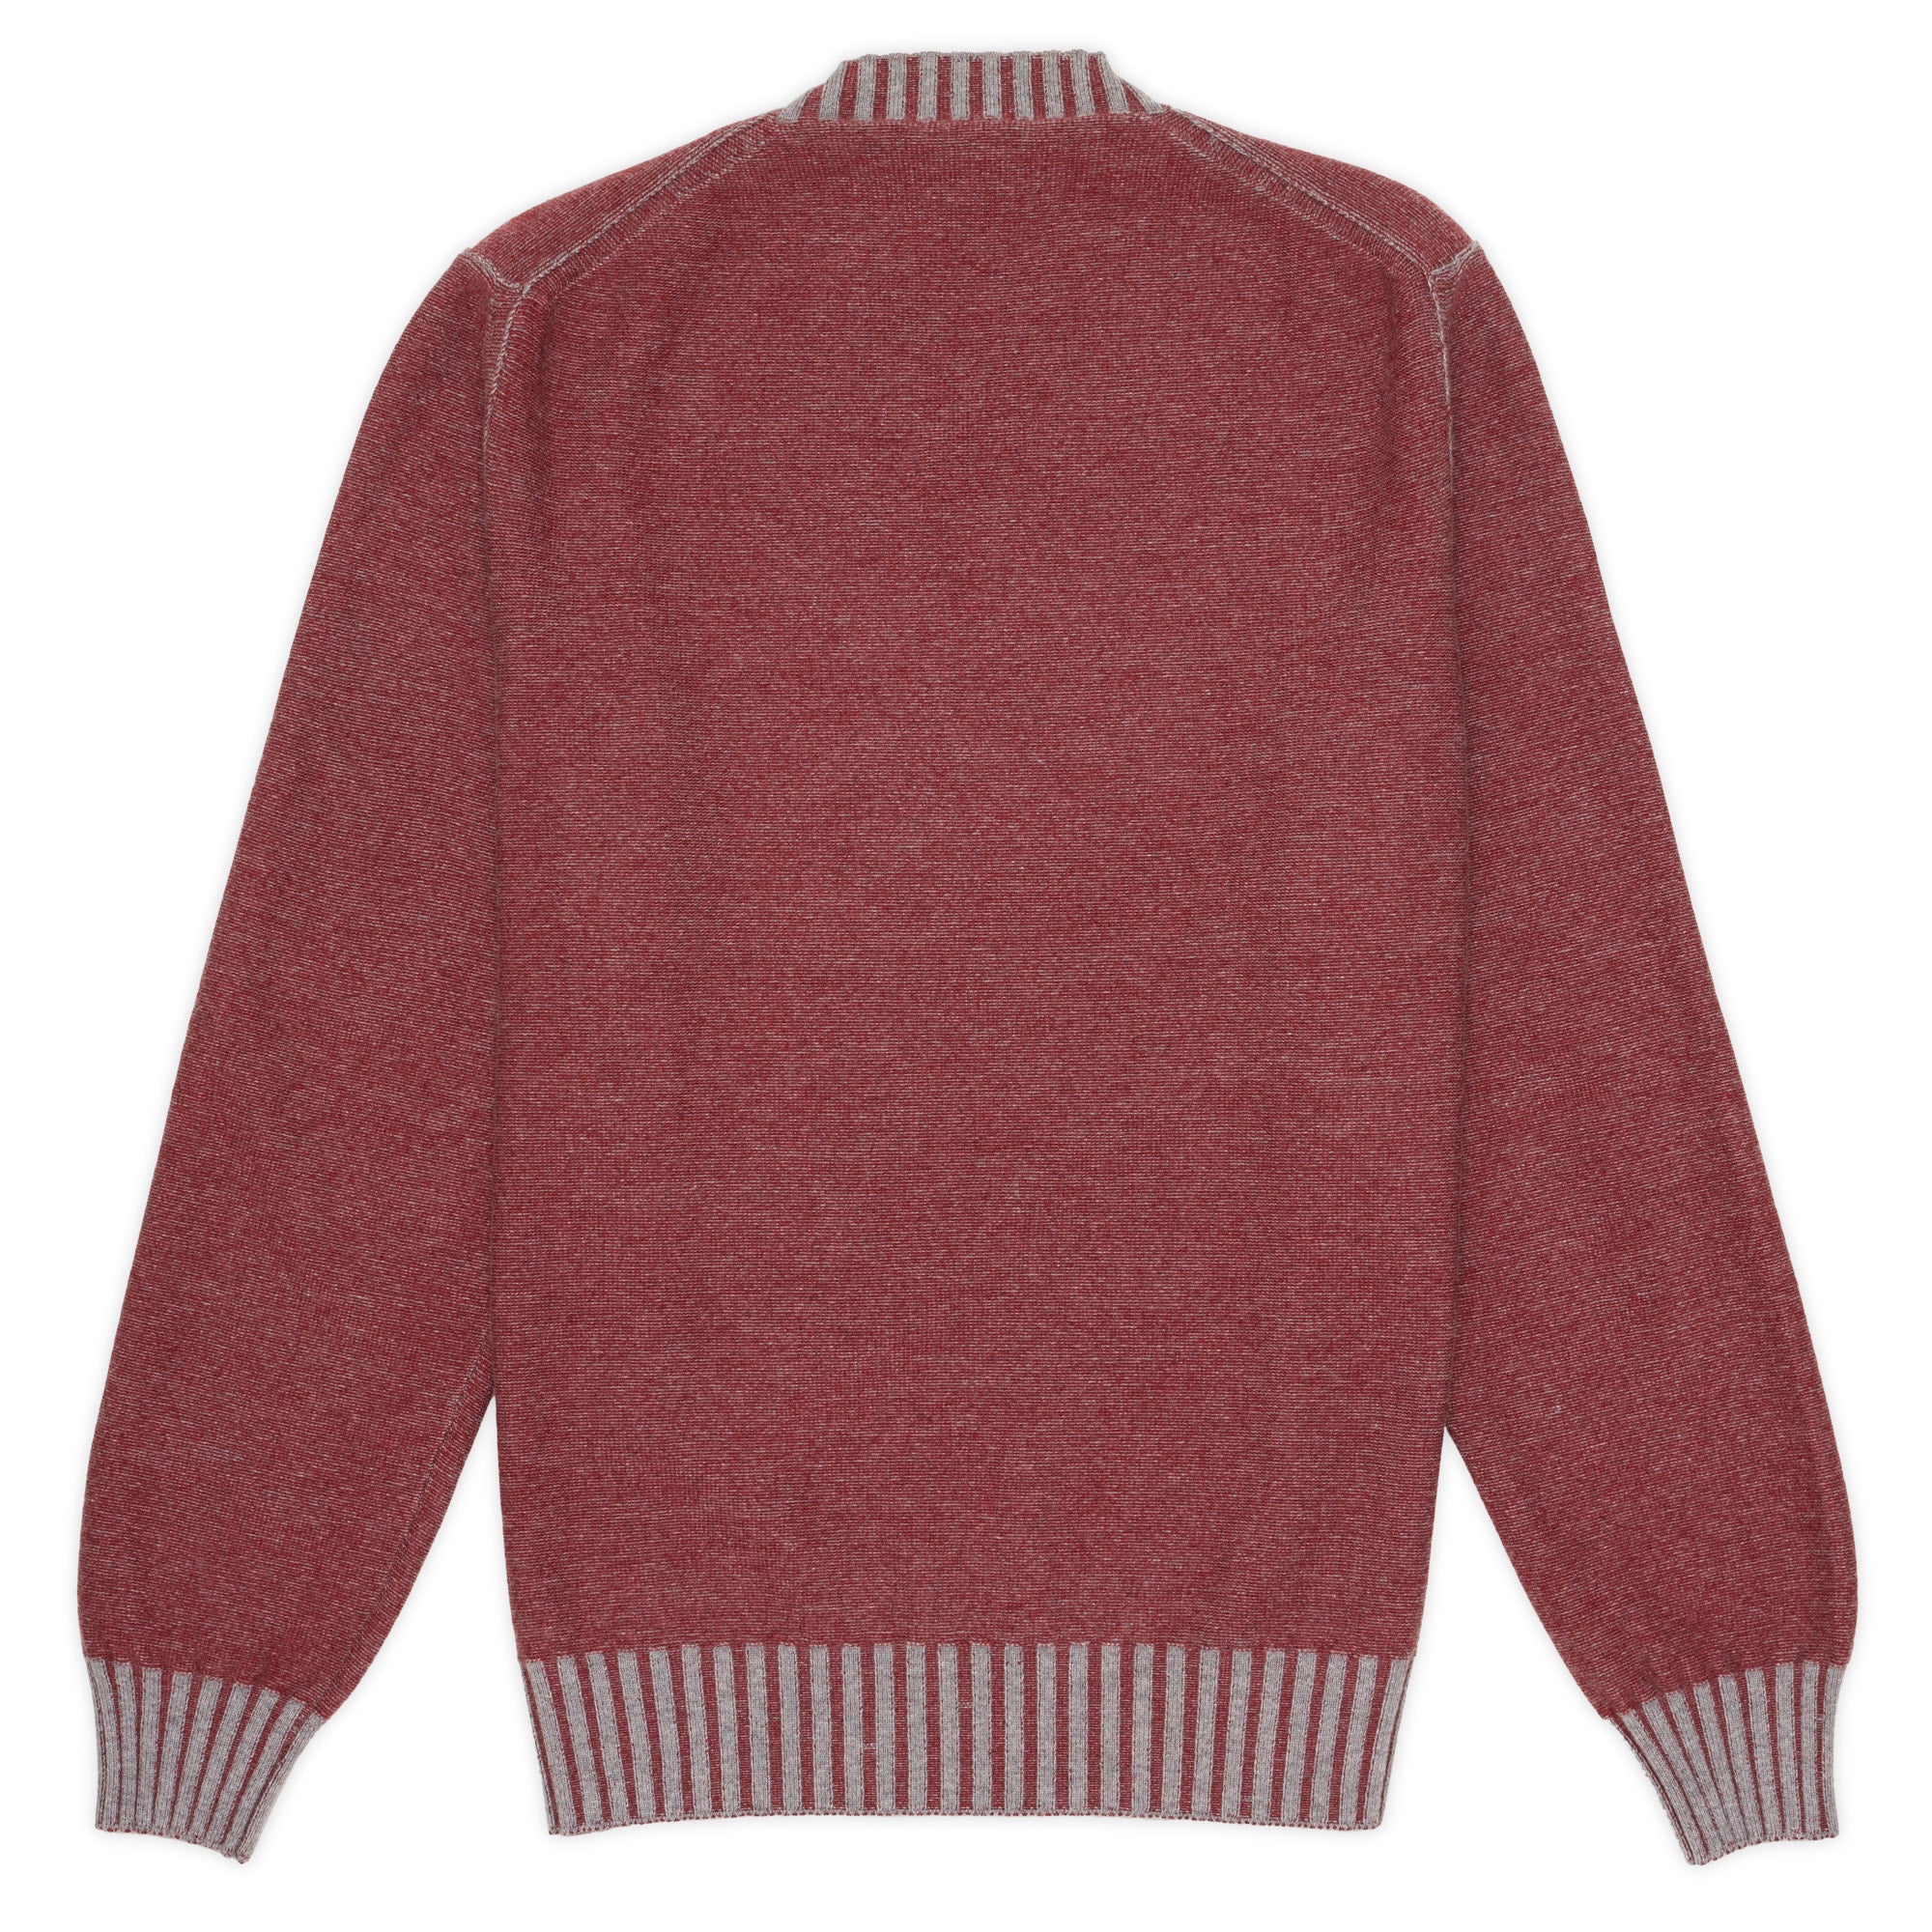 Sartoria CHIAIA Handmade Red Cashmere Wool Knit V-Neck Sweater EU 52 US M-L SARTORIA CHIAIA